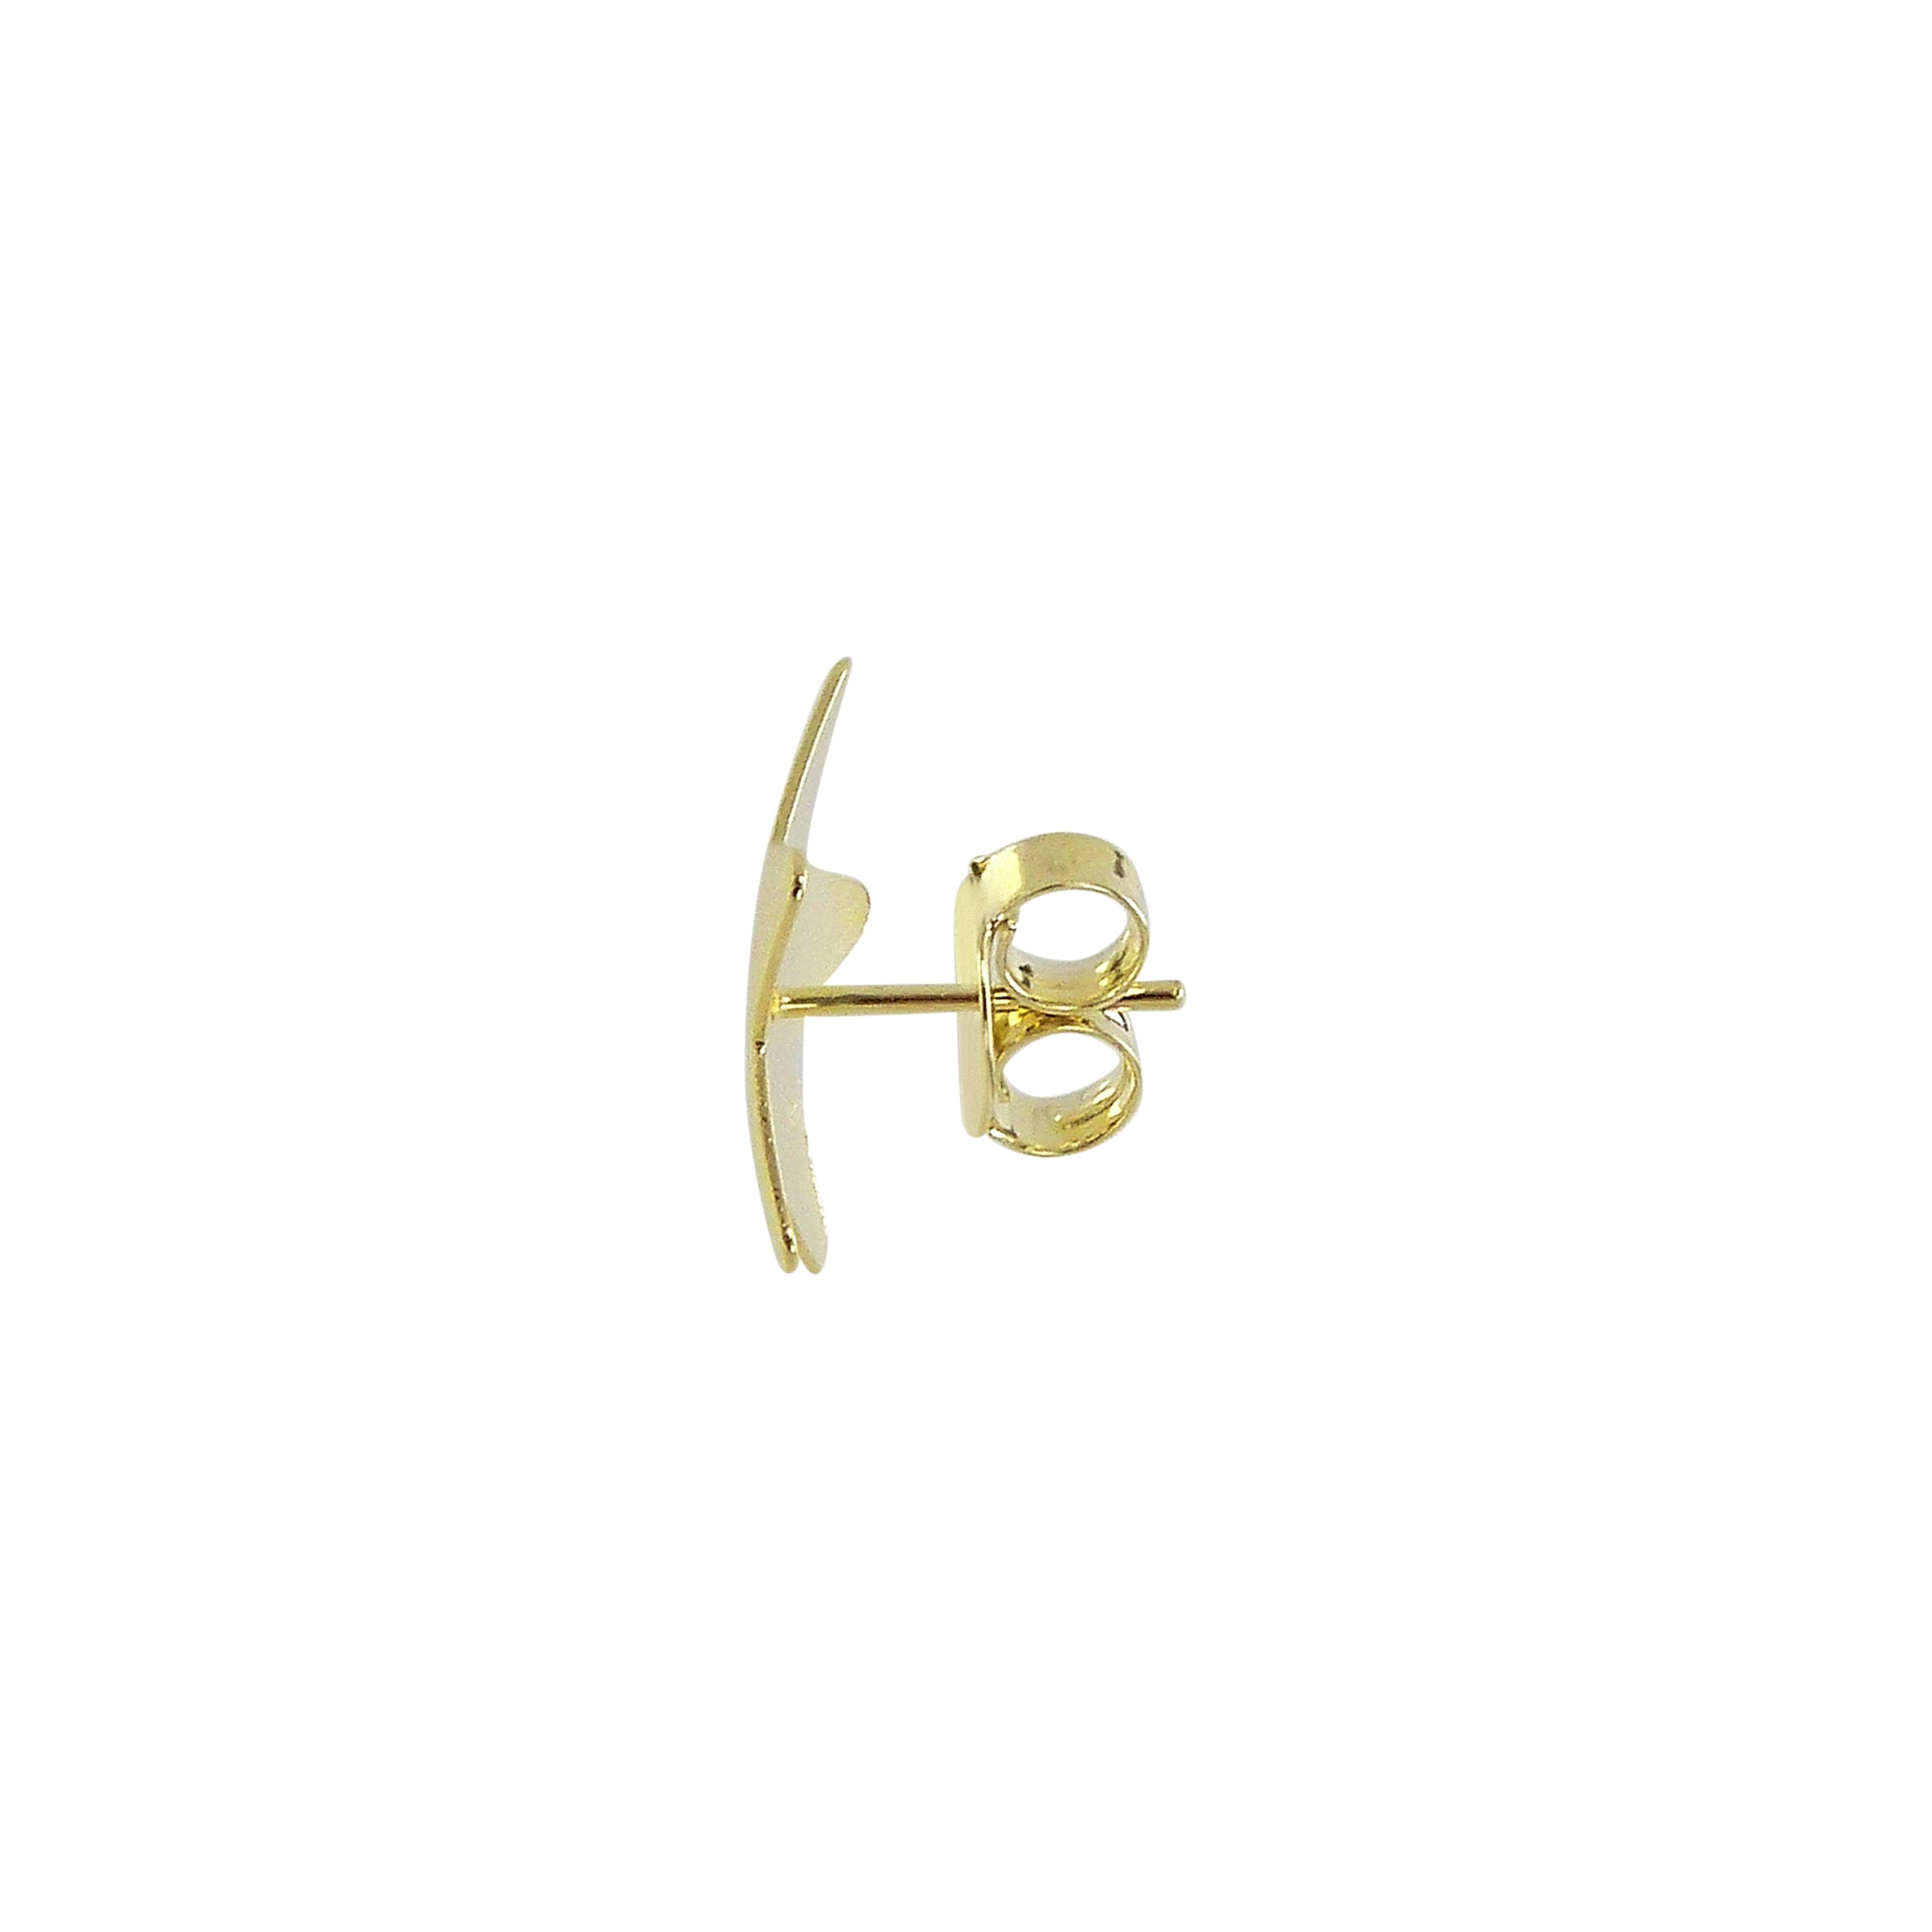 single side image of Sheila Fajl Lana Star Stud Earrings in Brushed Gold Plated